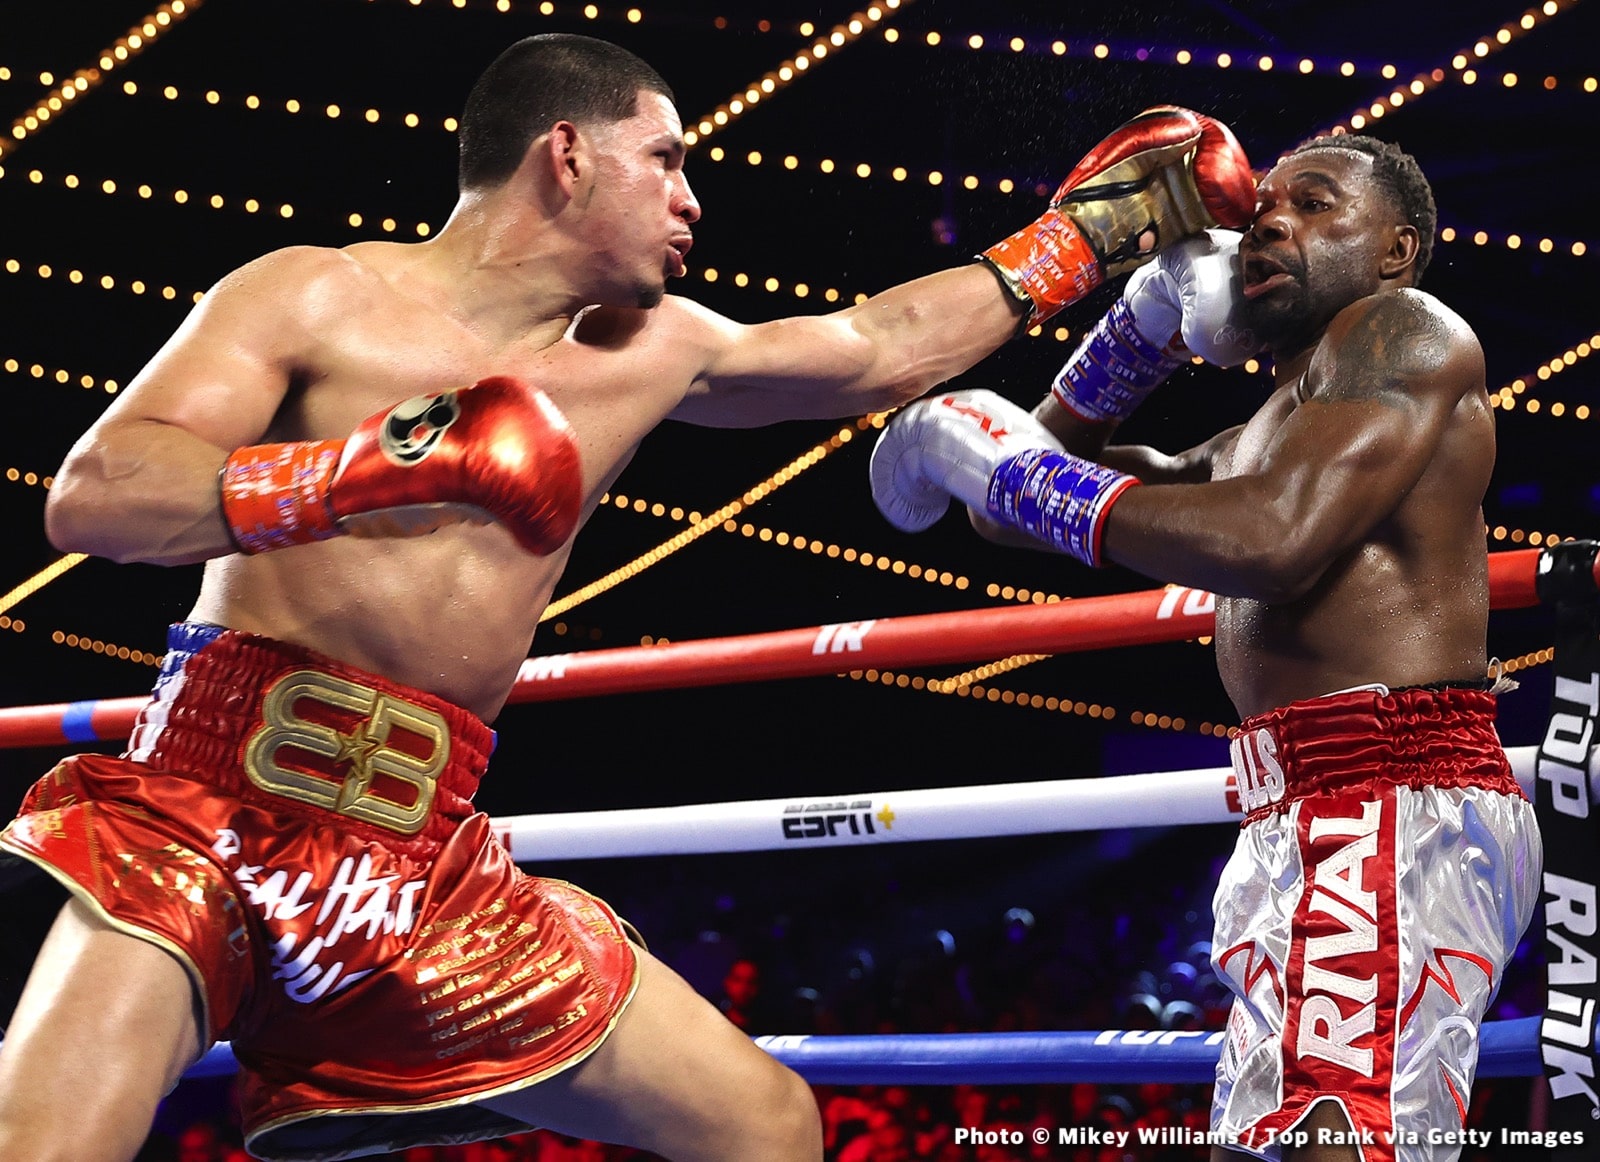 Edgar Berlanga boxing image / photo